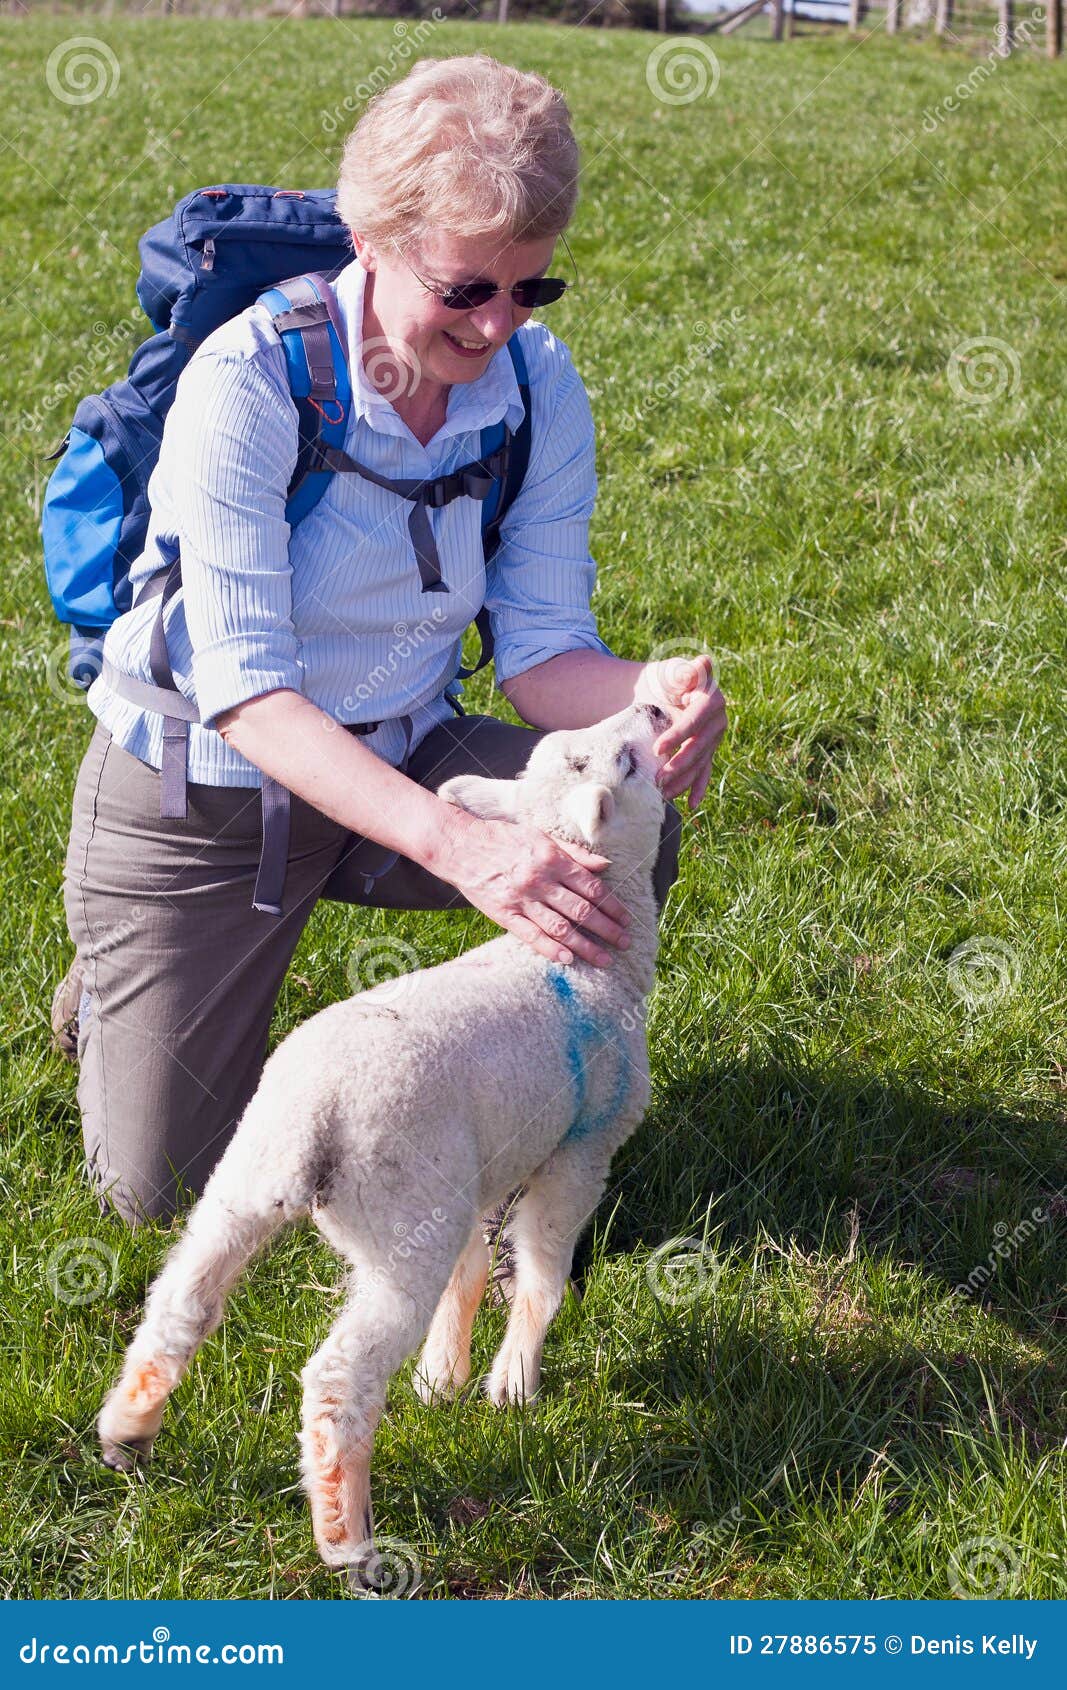 woman stroking a lamb